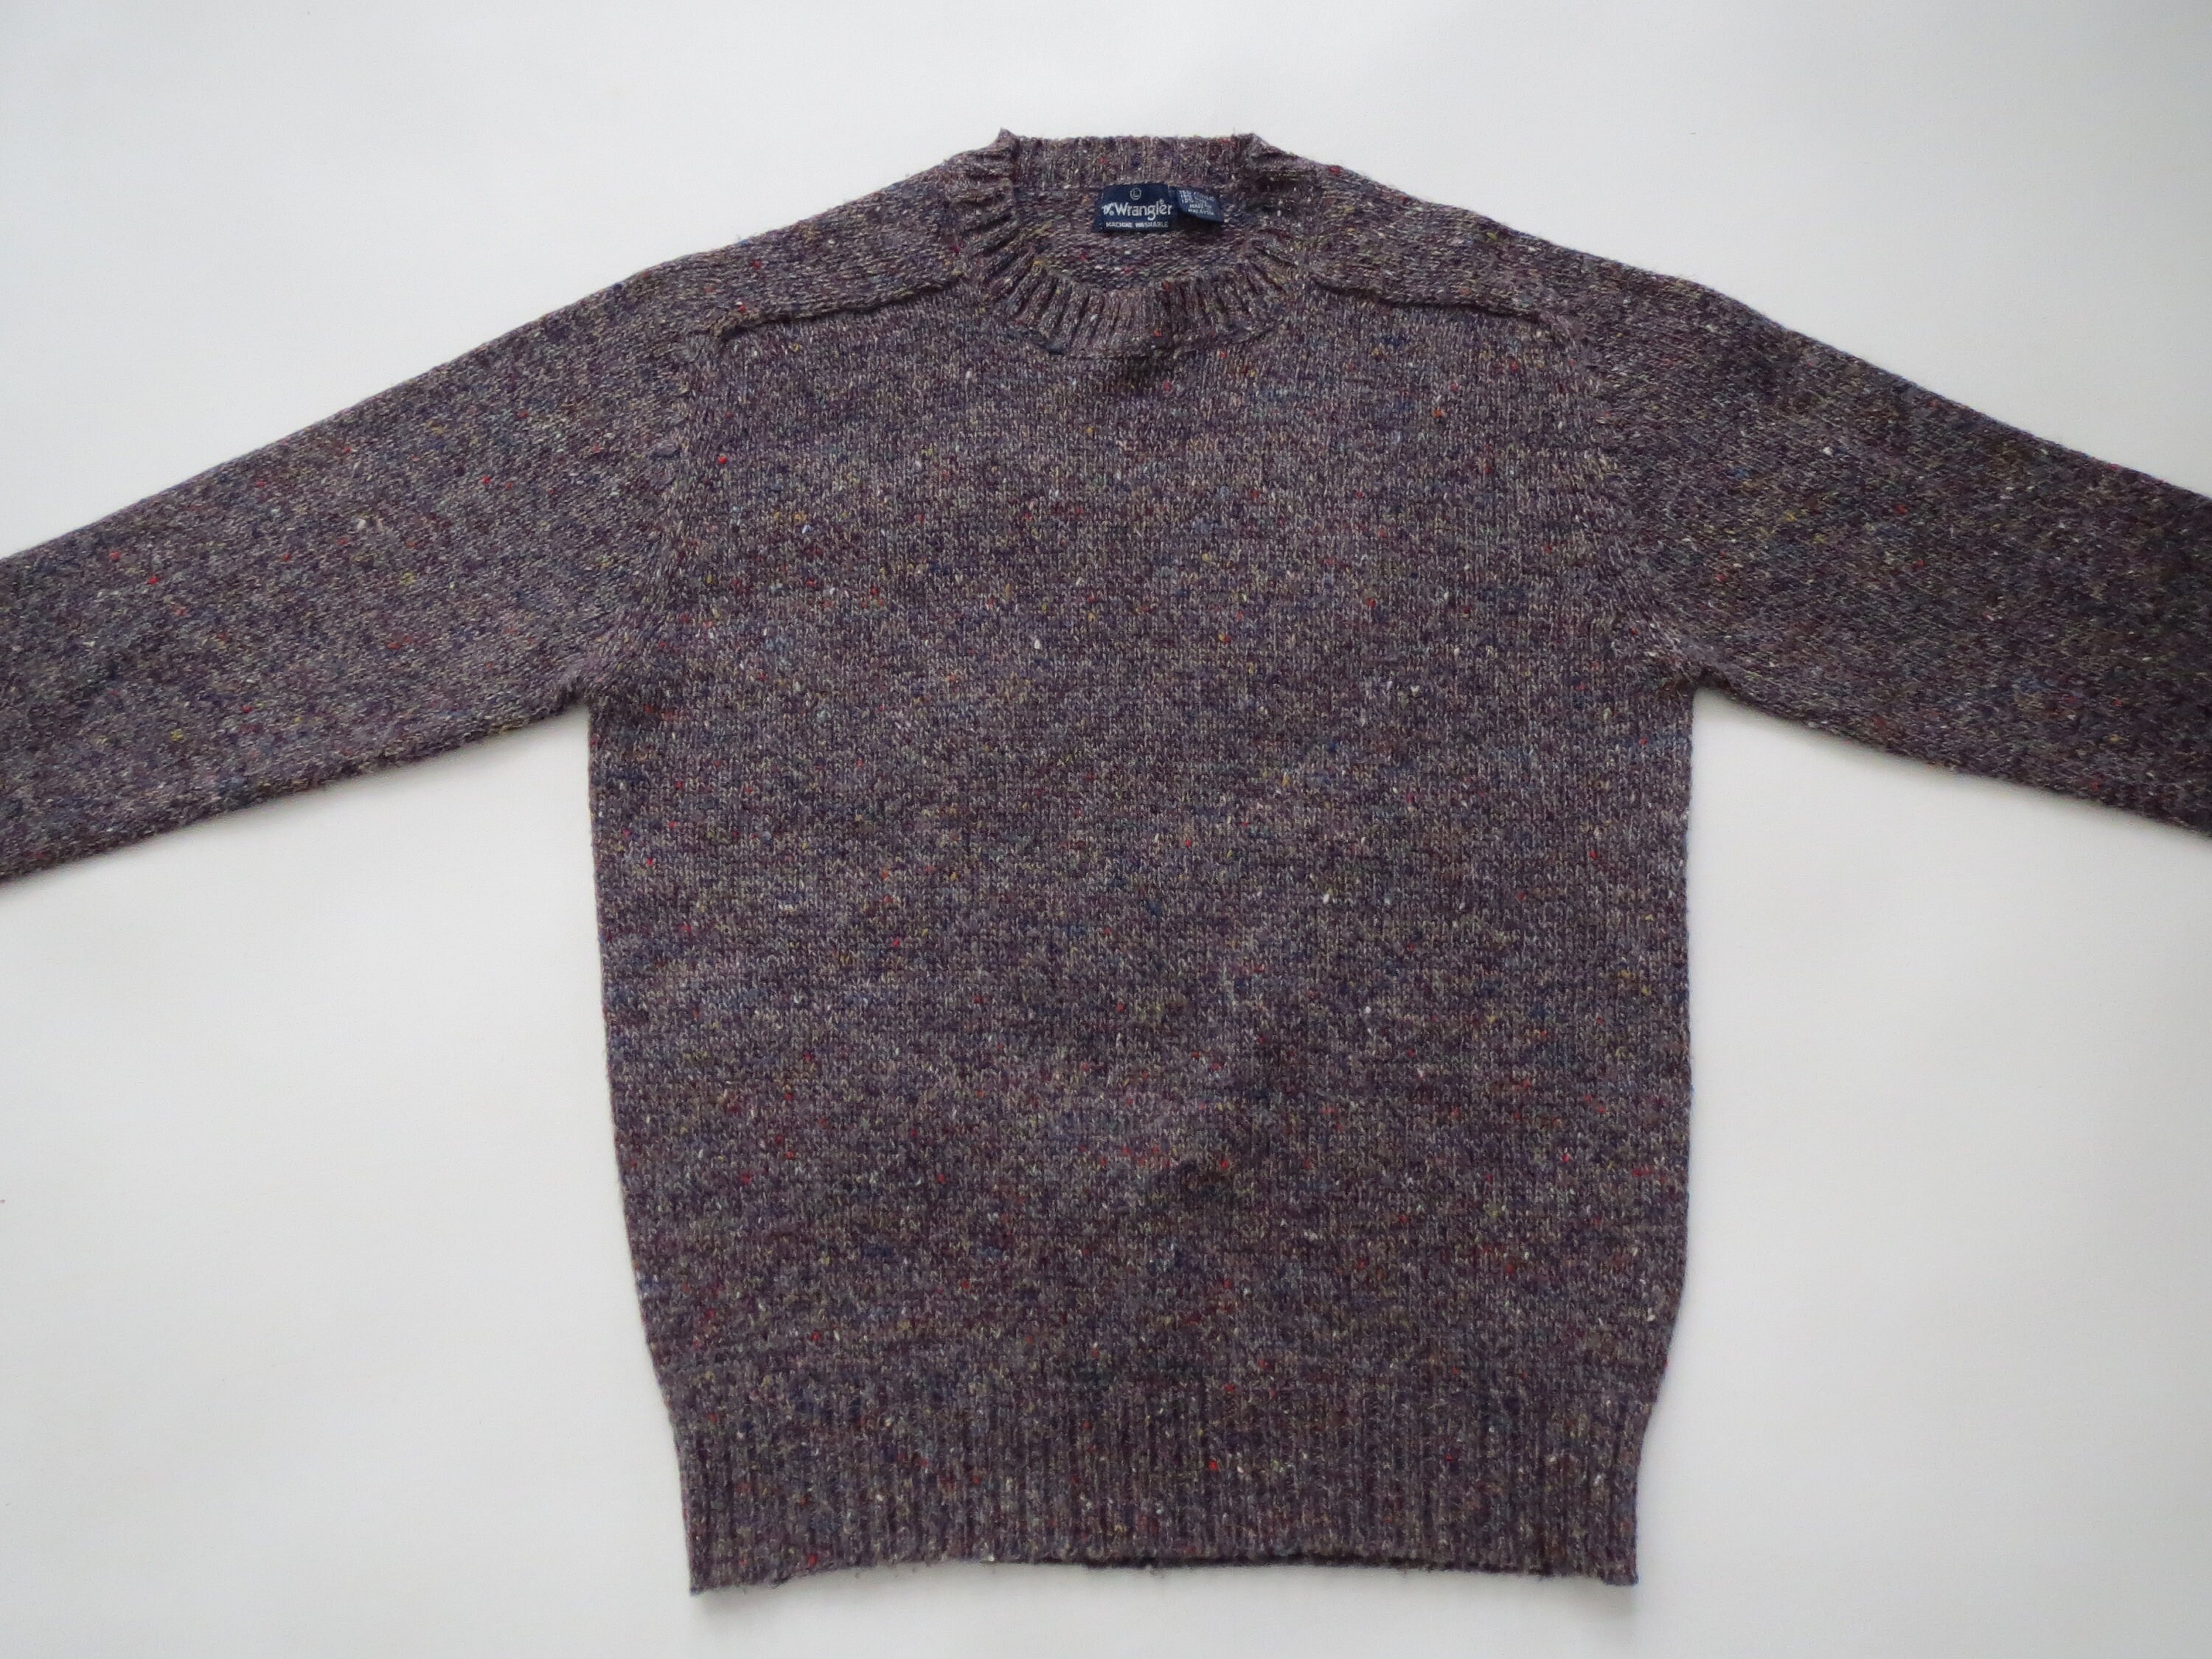 Wrangler Wool Blend Sweater Vintage Crewneck Heather Flecked Pullover Clothing Unisex Men's Large L